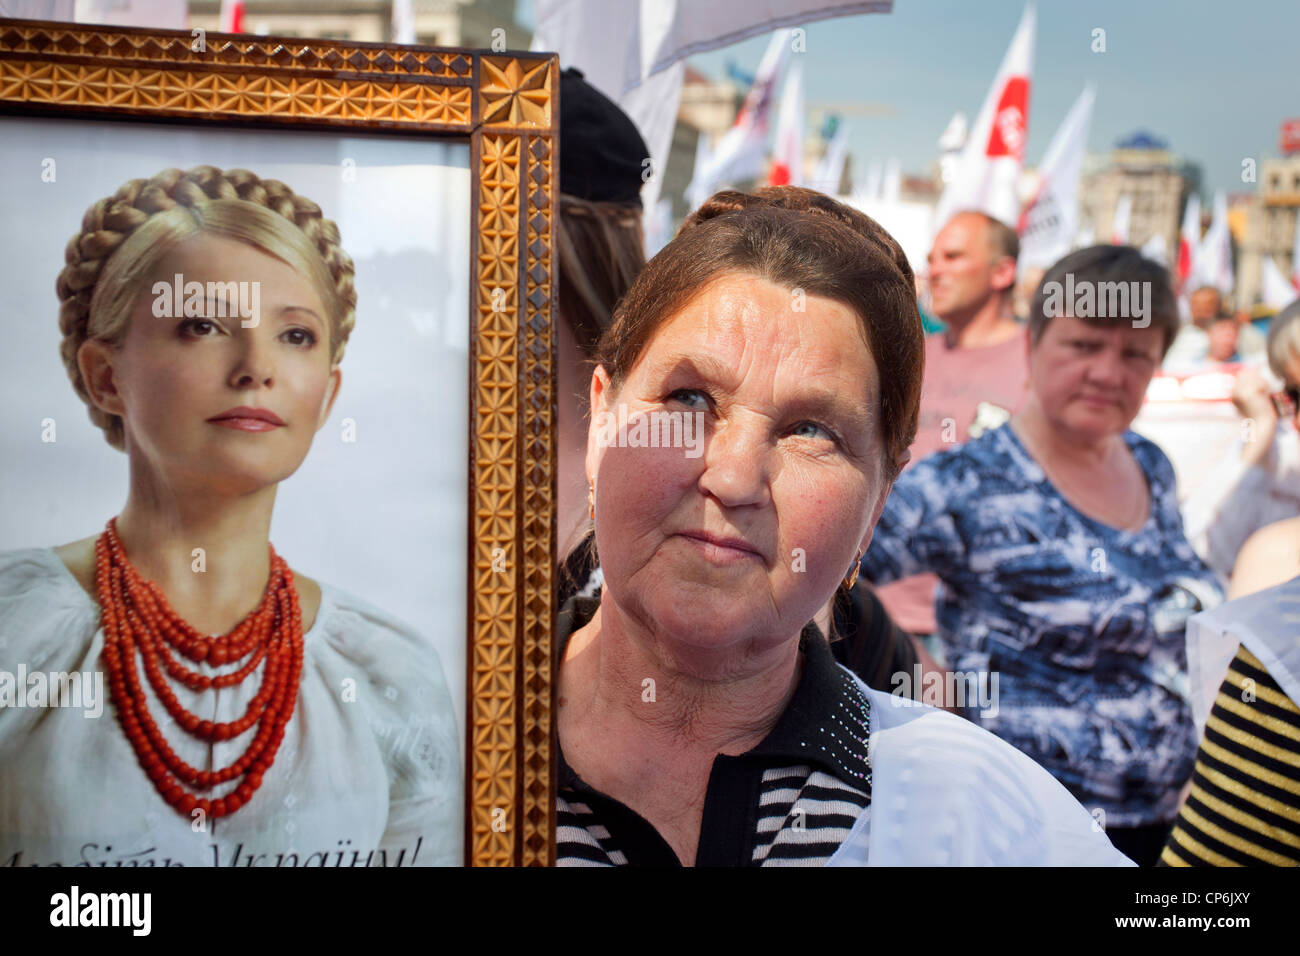 Eine Protestkundgebung für Yulia Tymoshenko in Kiew, Ukraine. Stockfoto